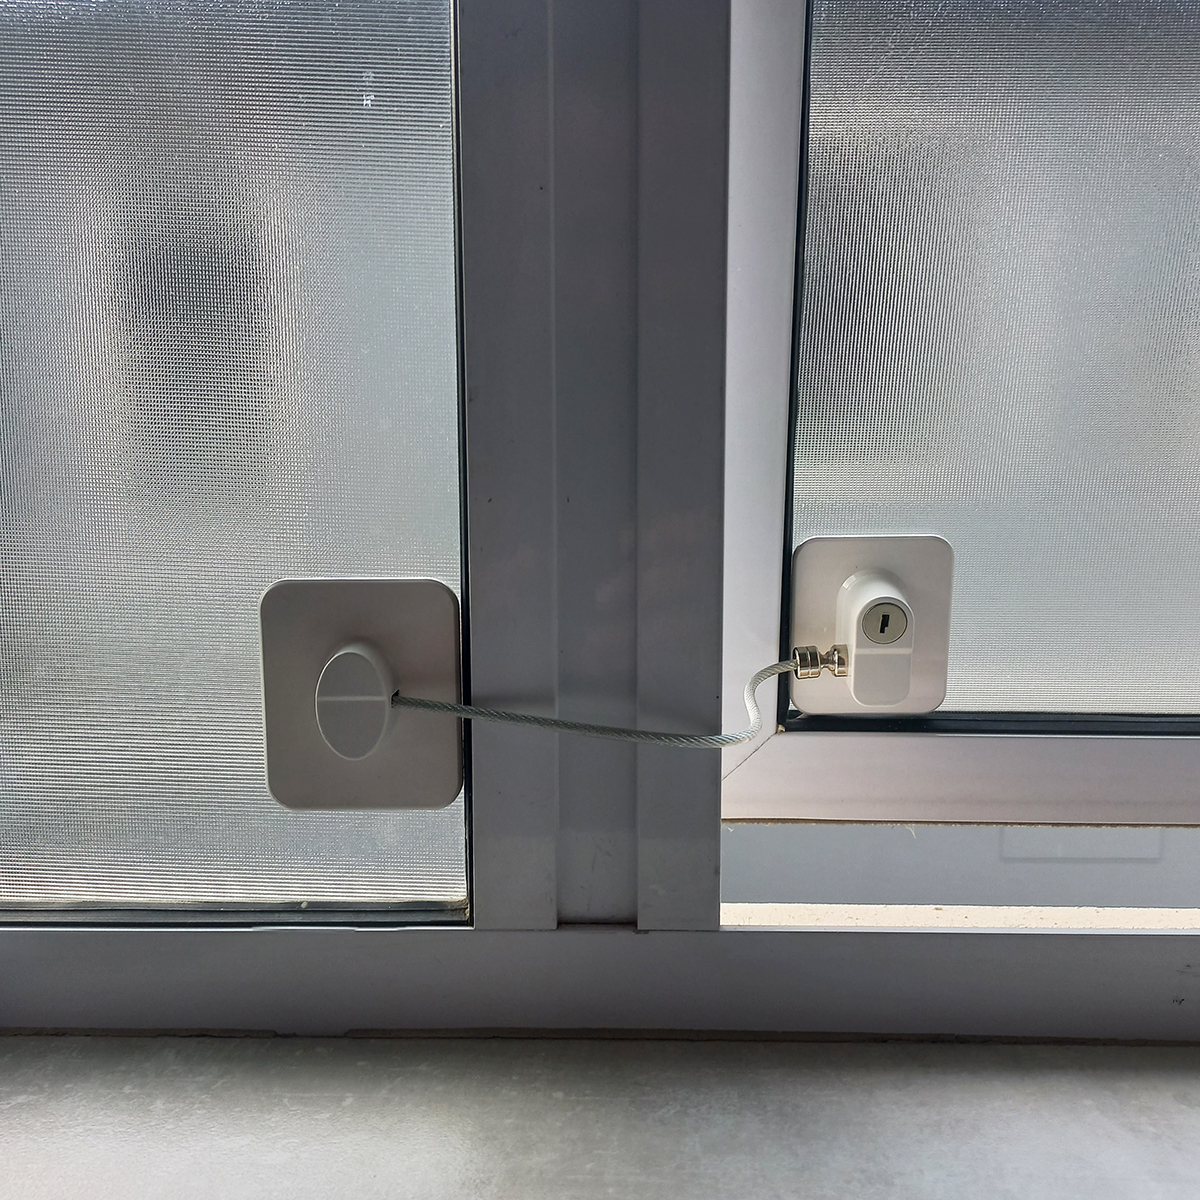 secure-self-adhesive-child-proof-window-locks-white